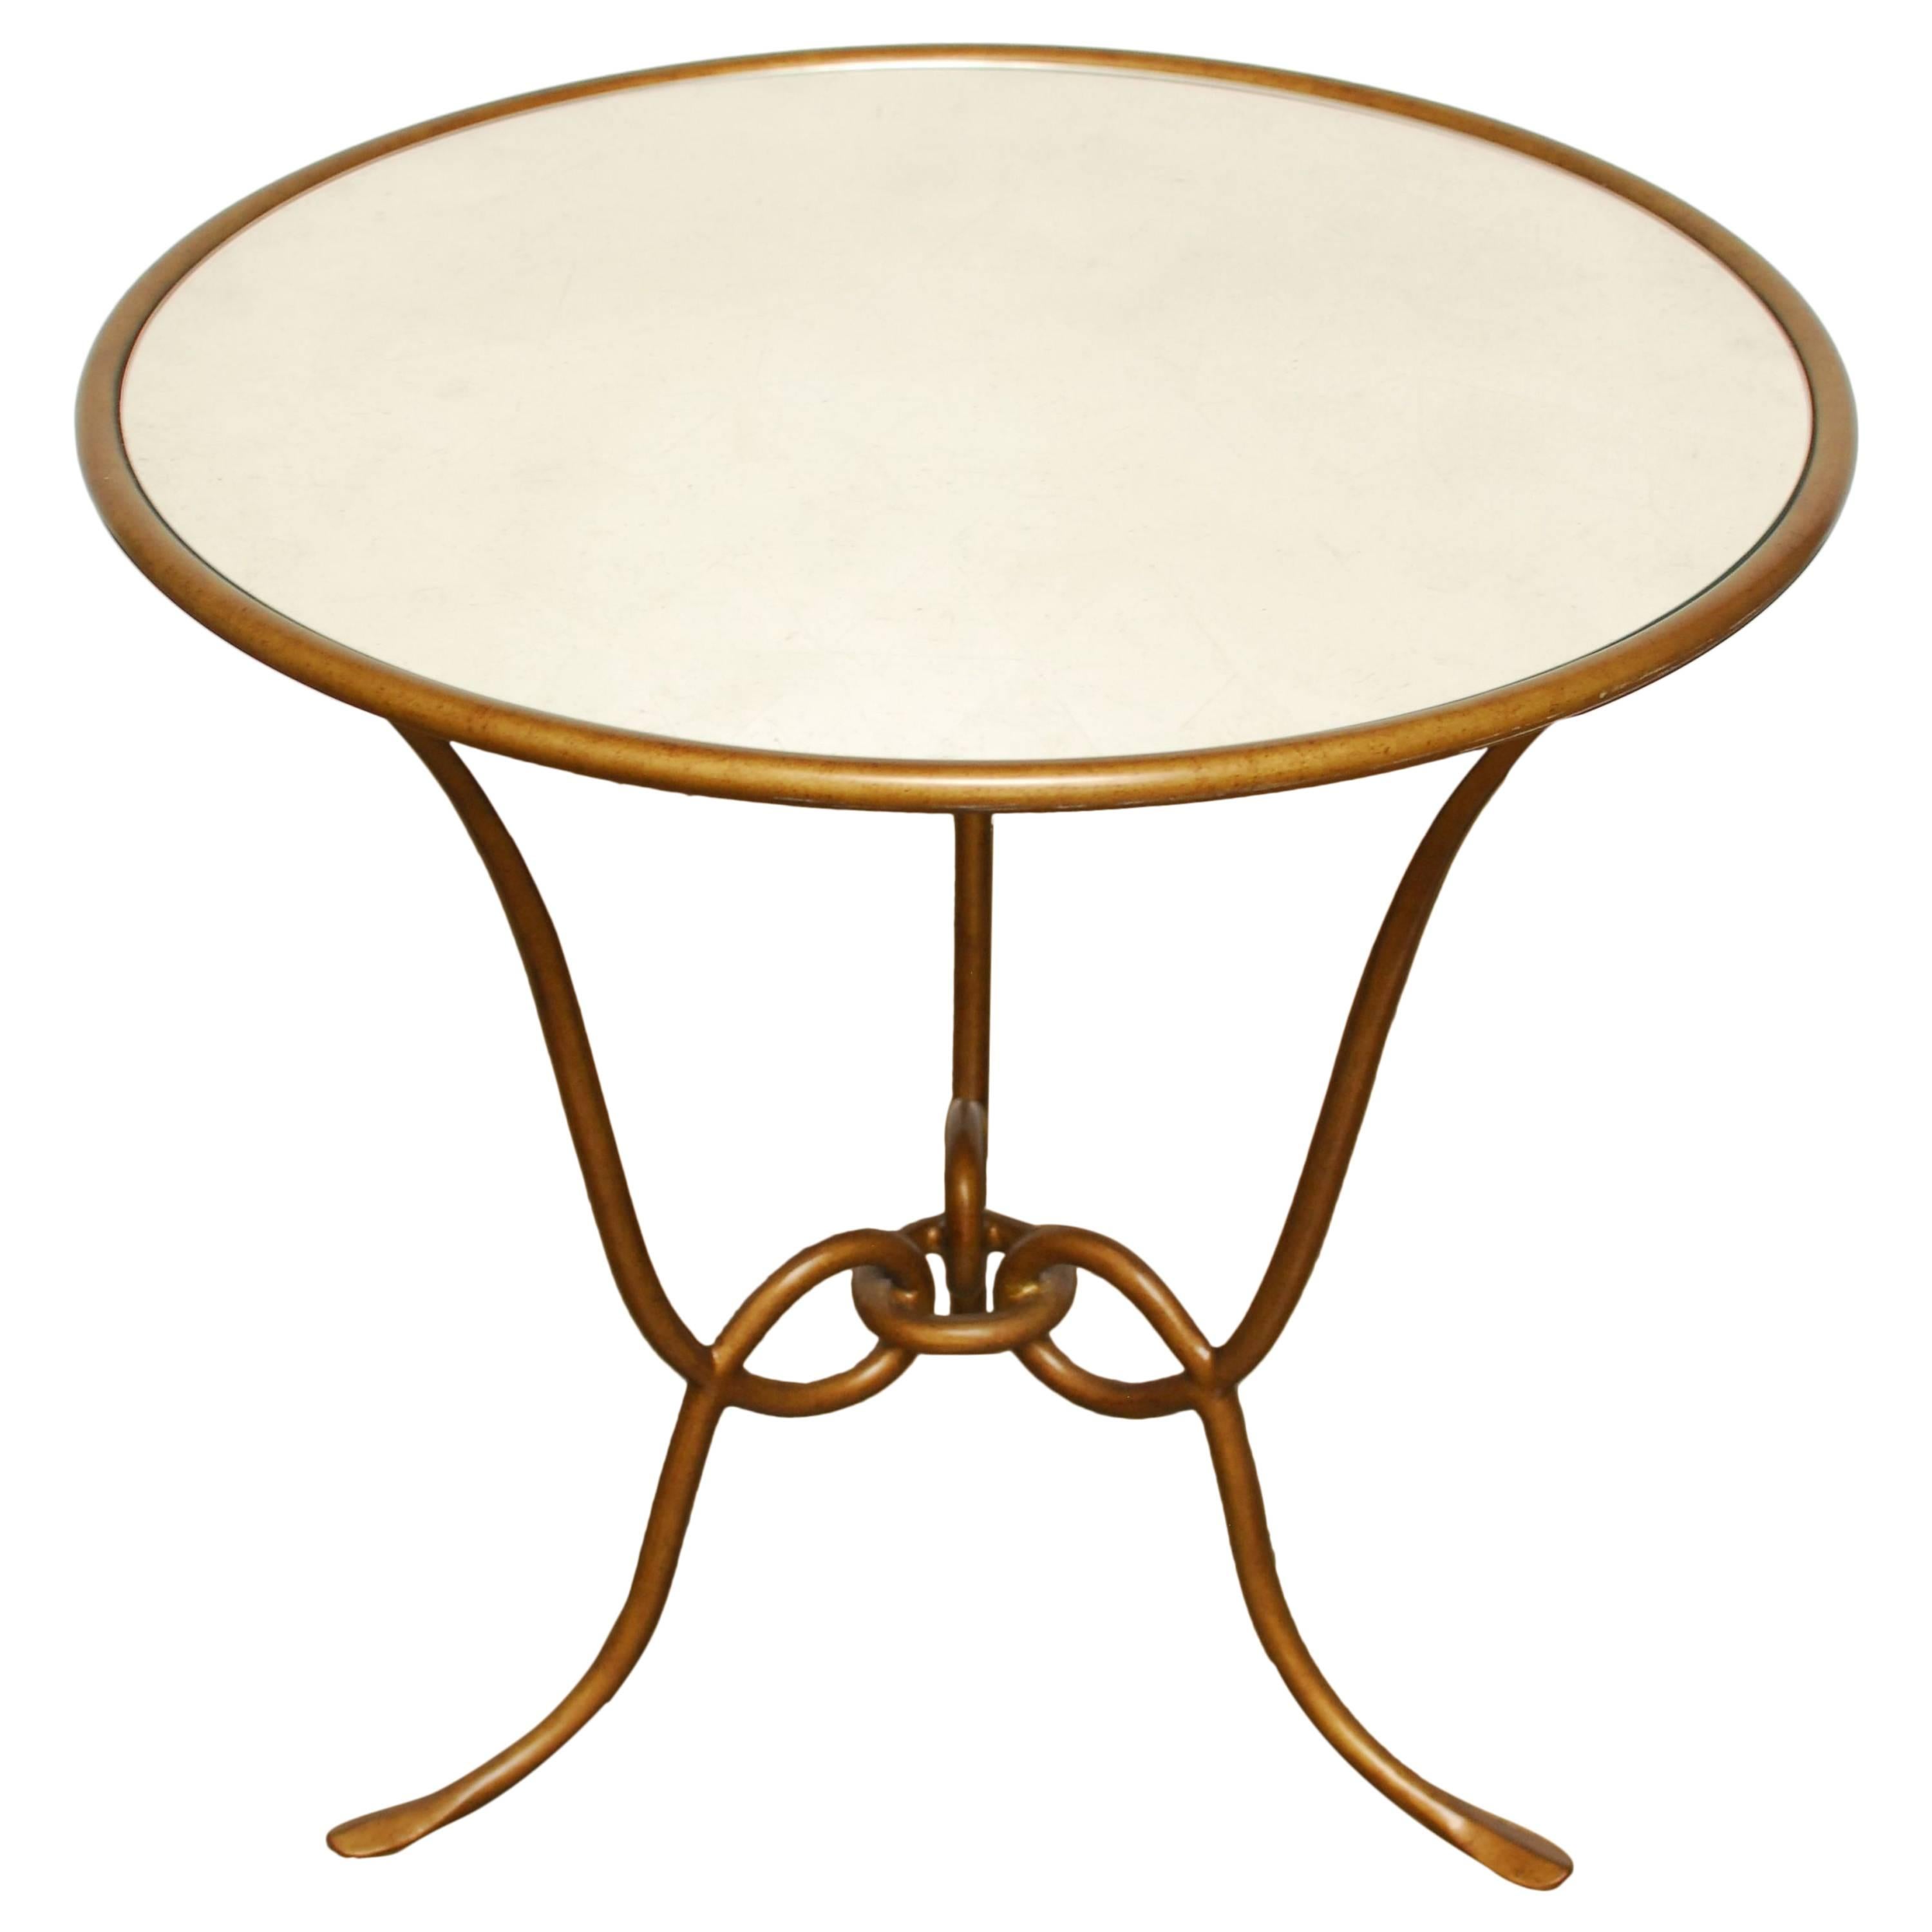 Rene Drouet Style Round Gilded Iron Table